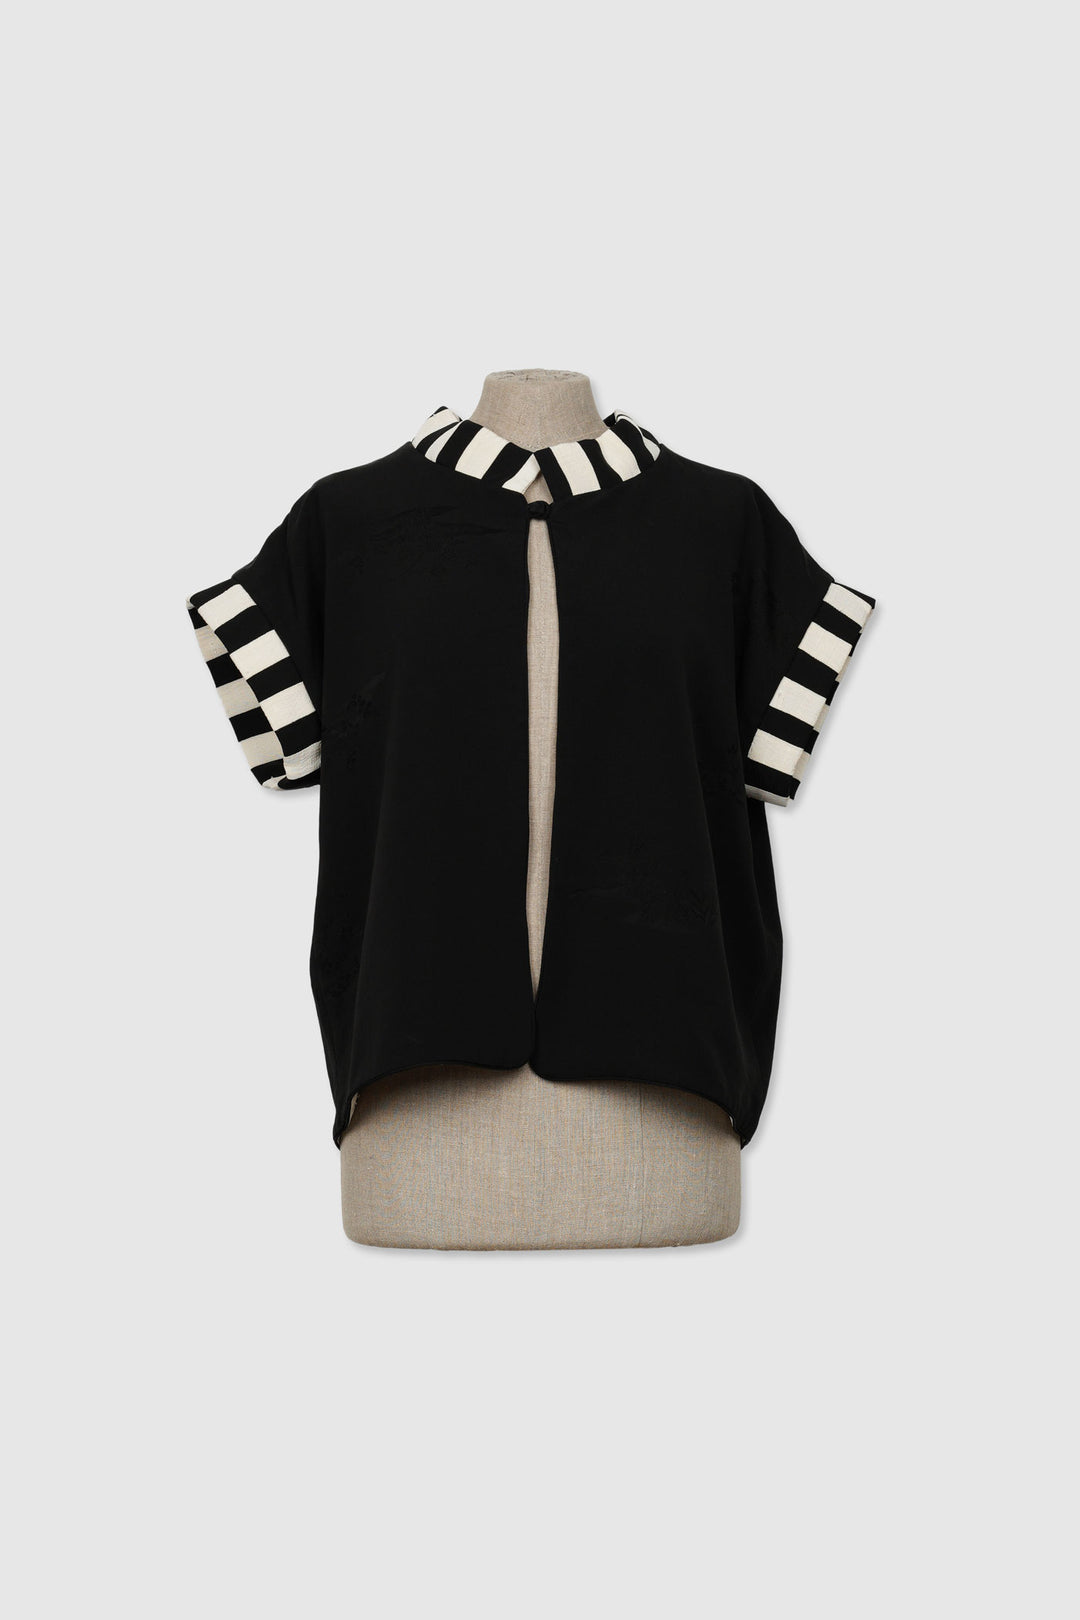 Black & White Silk Reversible Jacket | Eterno Elegante